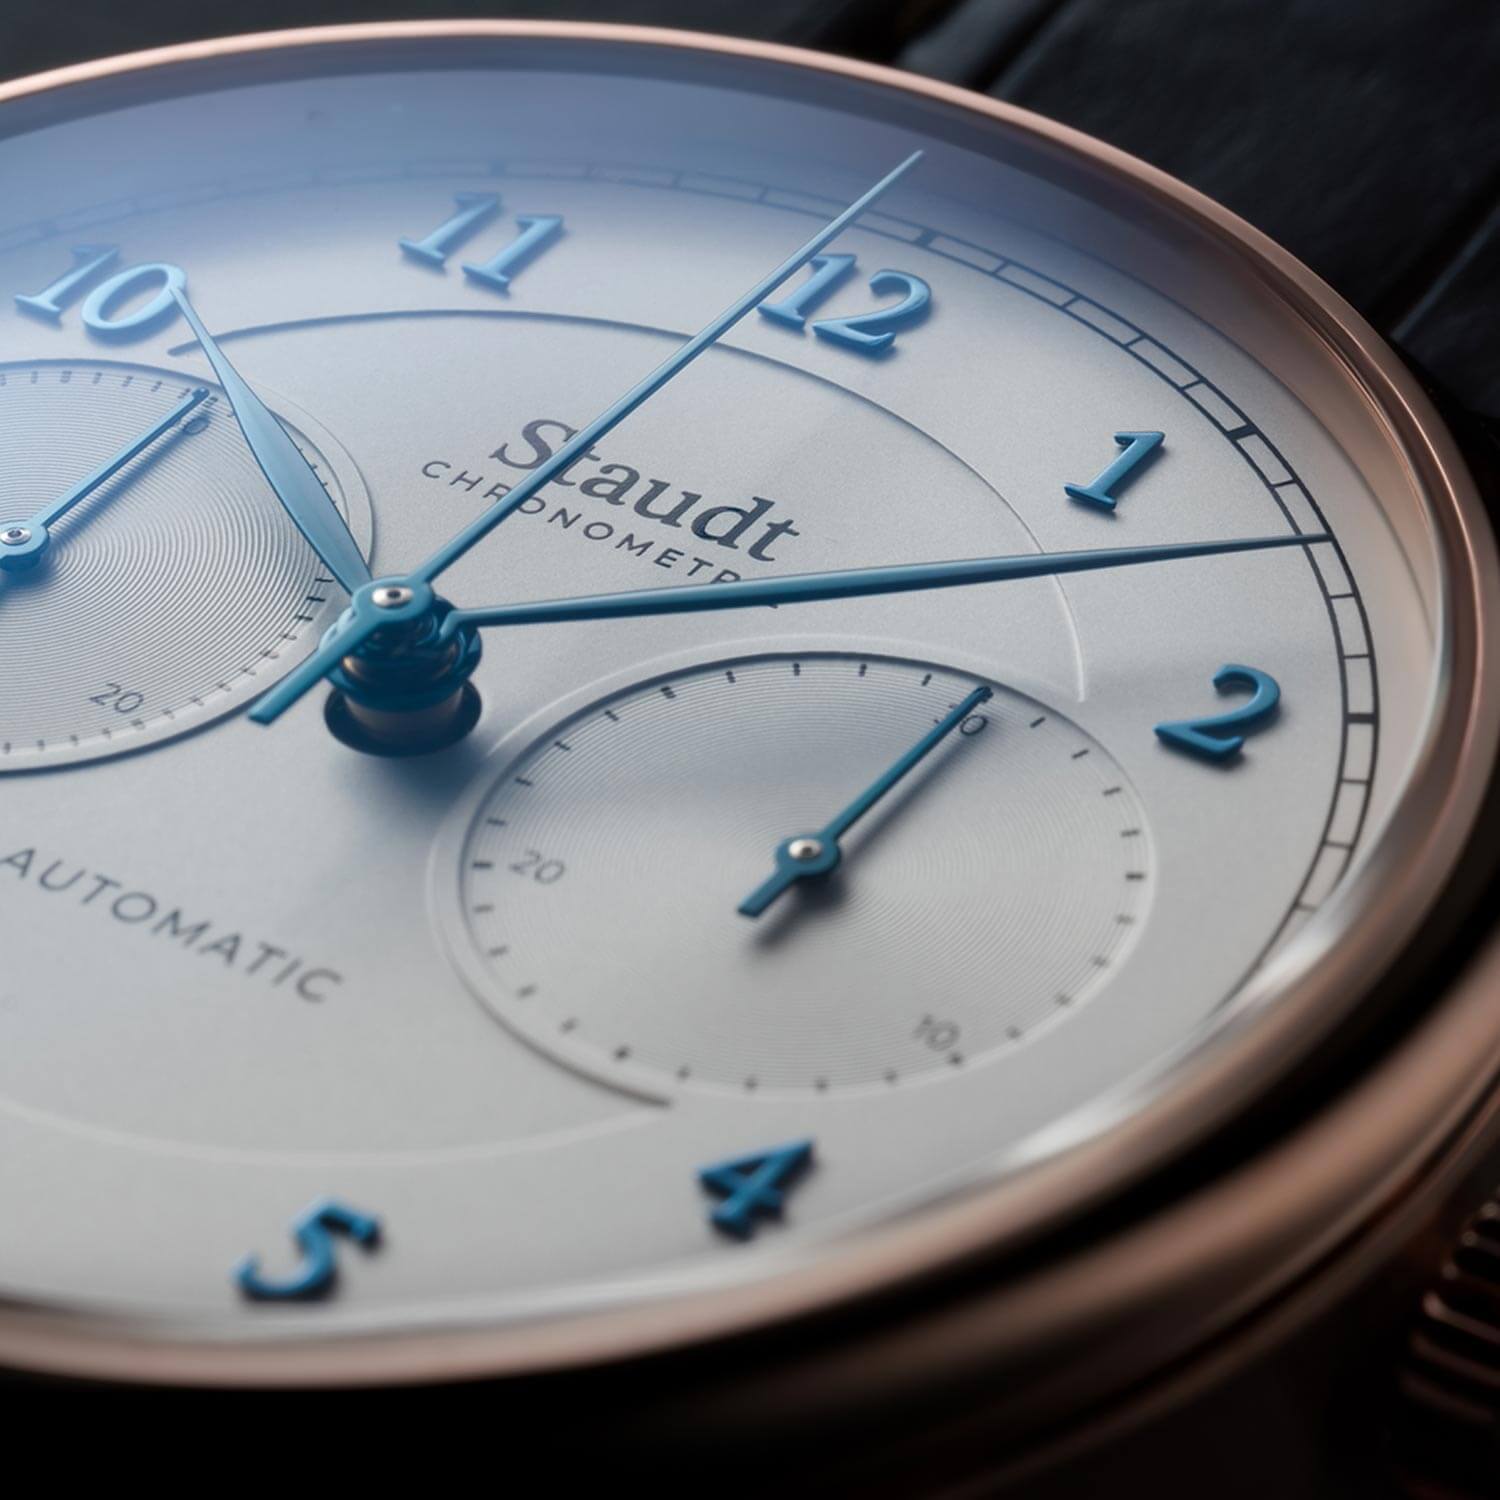 Staudt Prelude gold chronograph mechanical swiss made watch close up